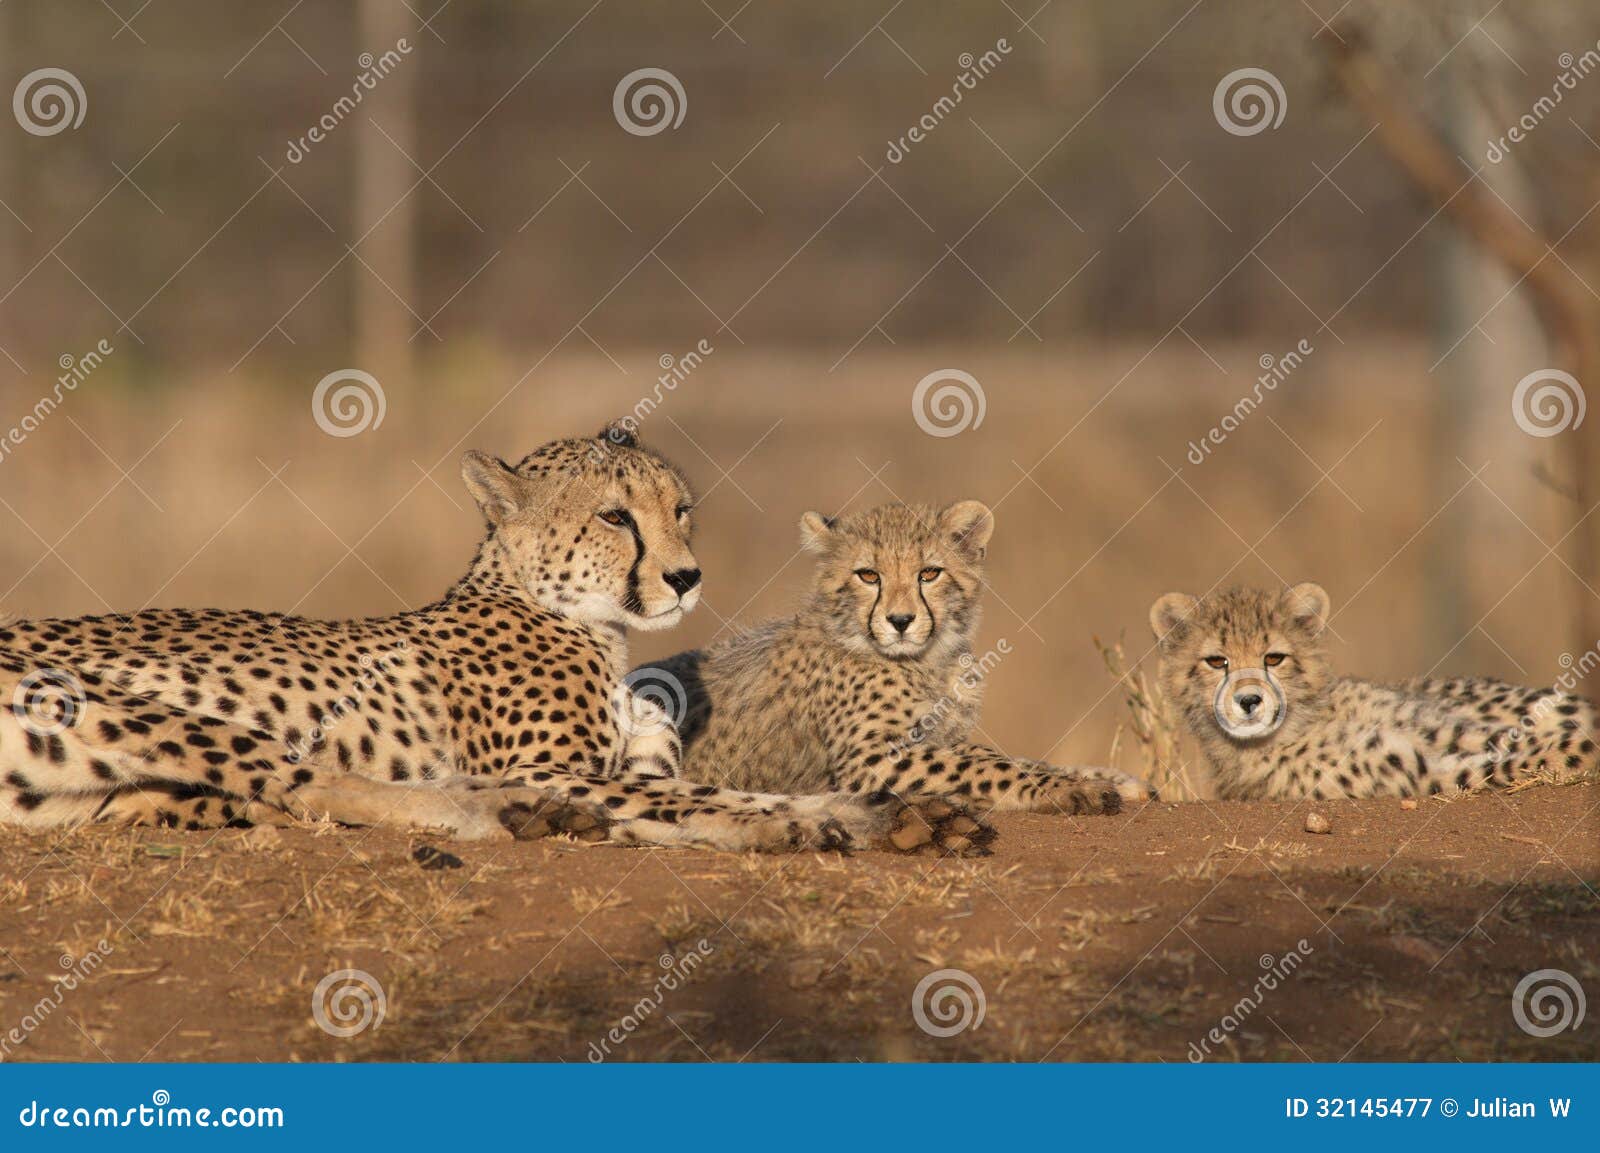 family of cheetahs